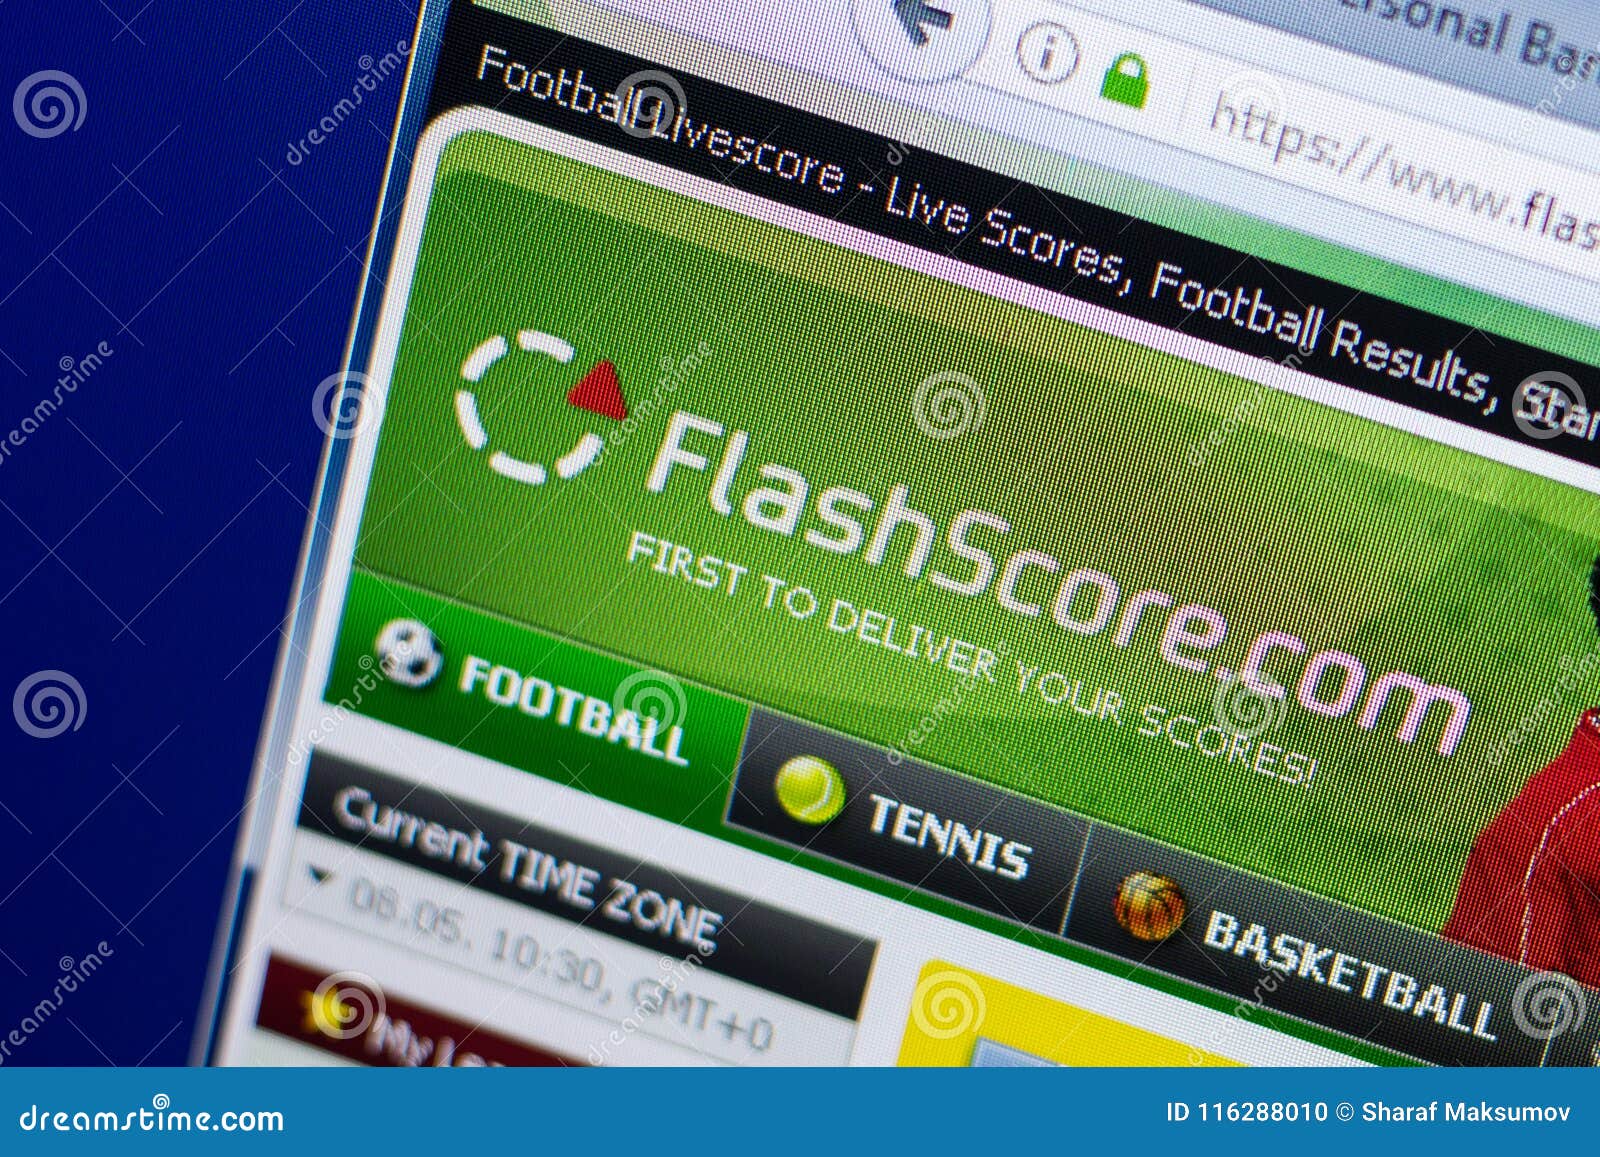 Flashscore Stock Photos